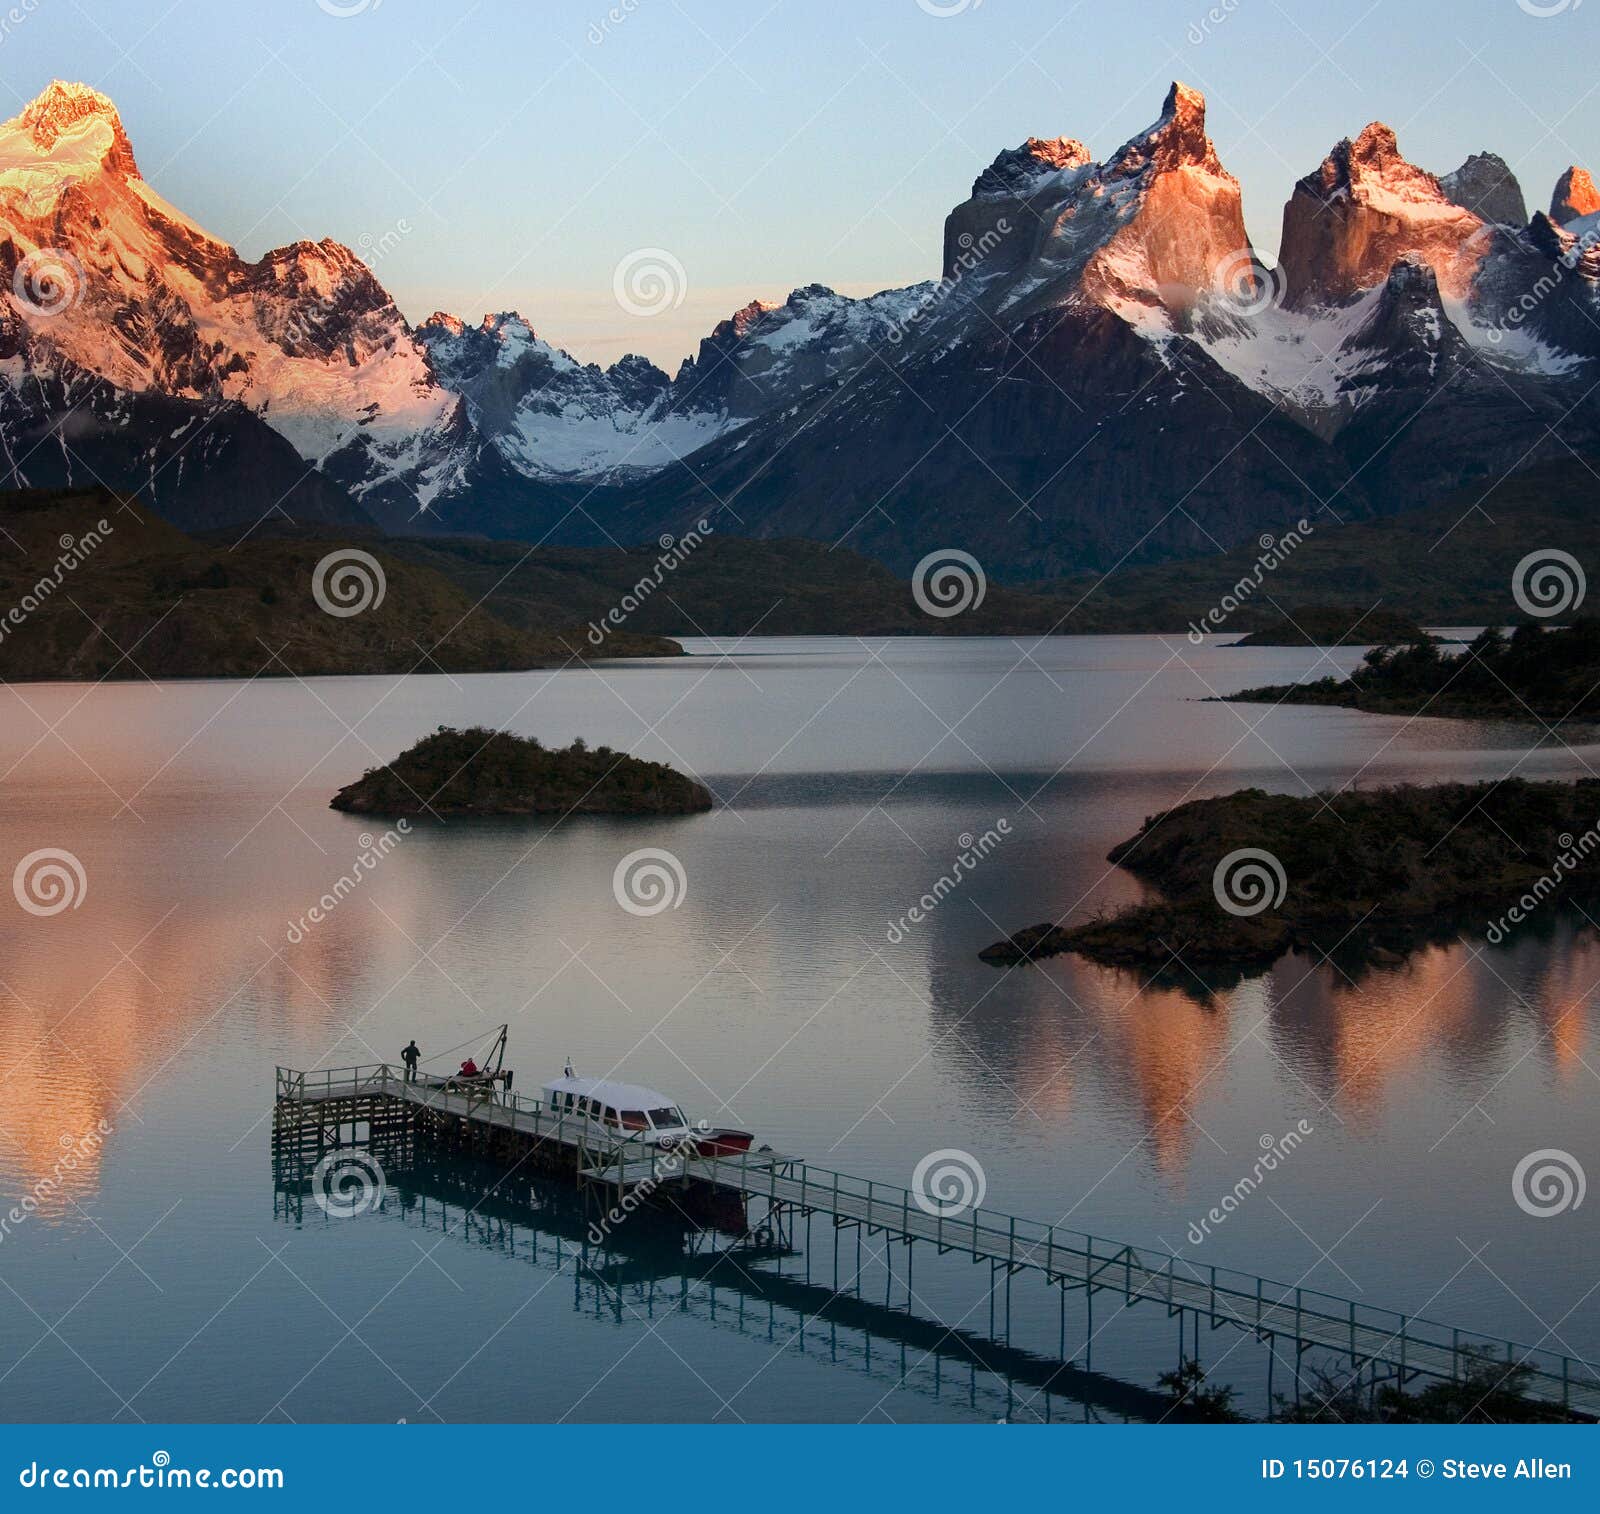 torres del paine national park - patagonia